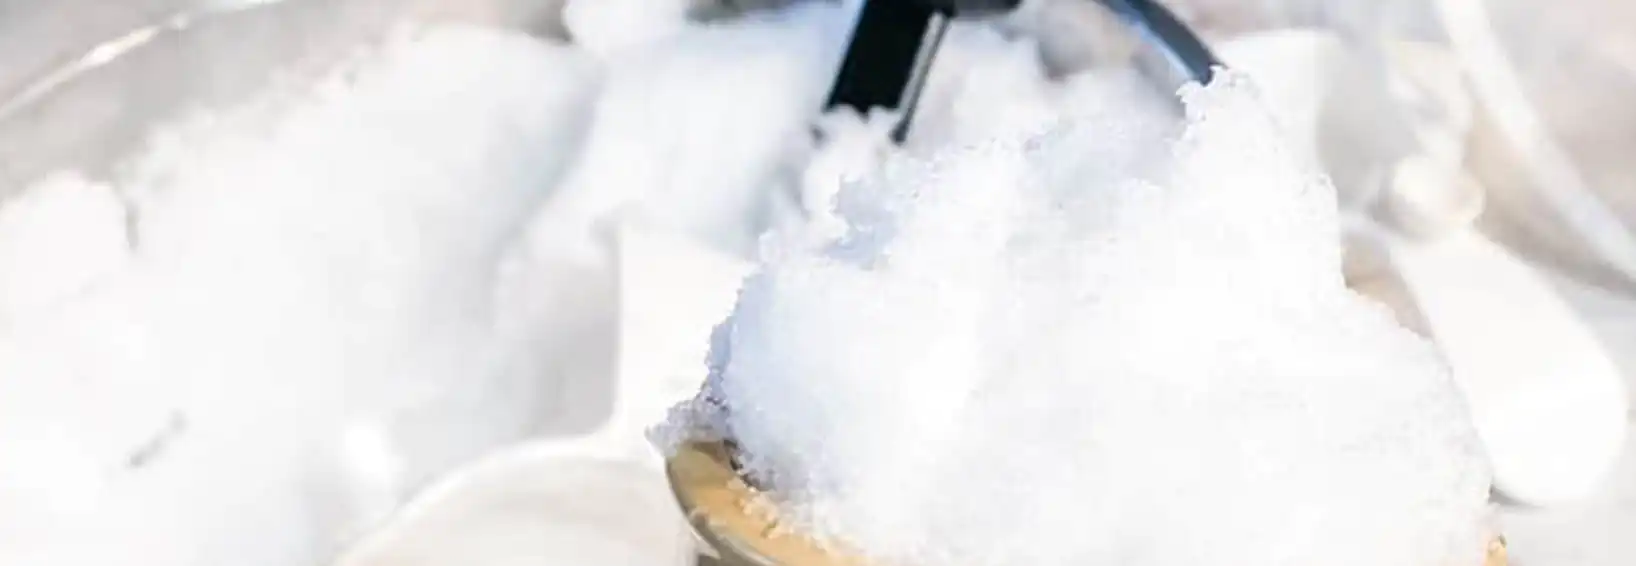 Homemade snow ice cream